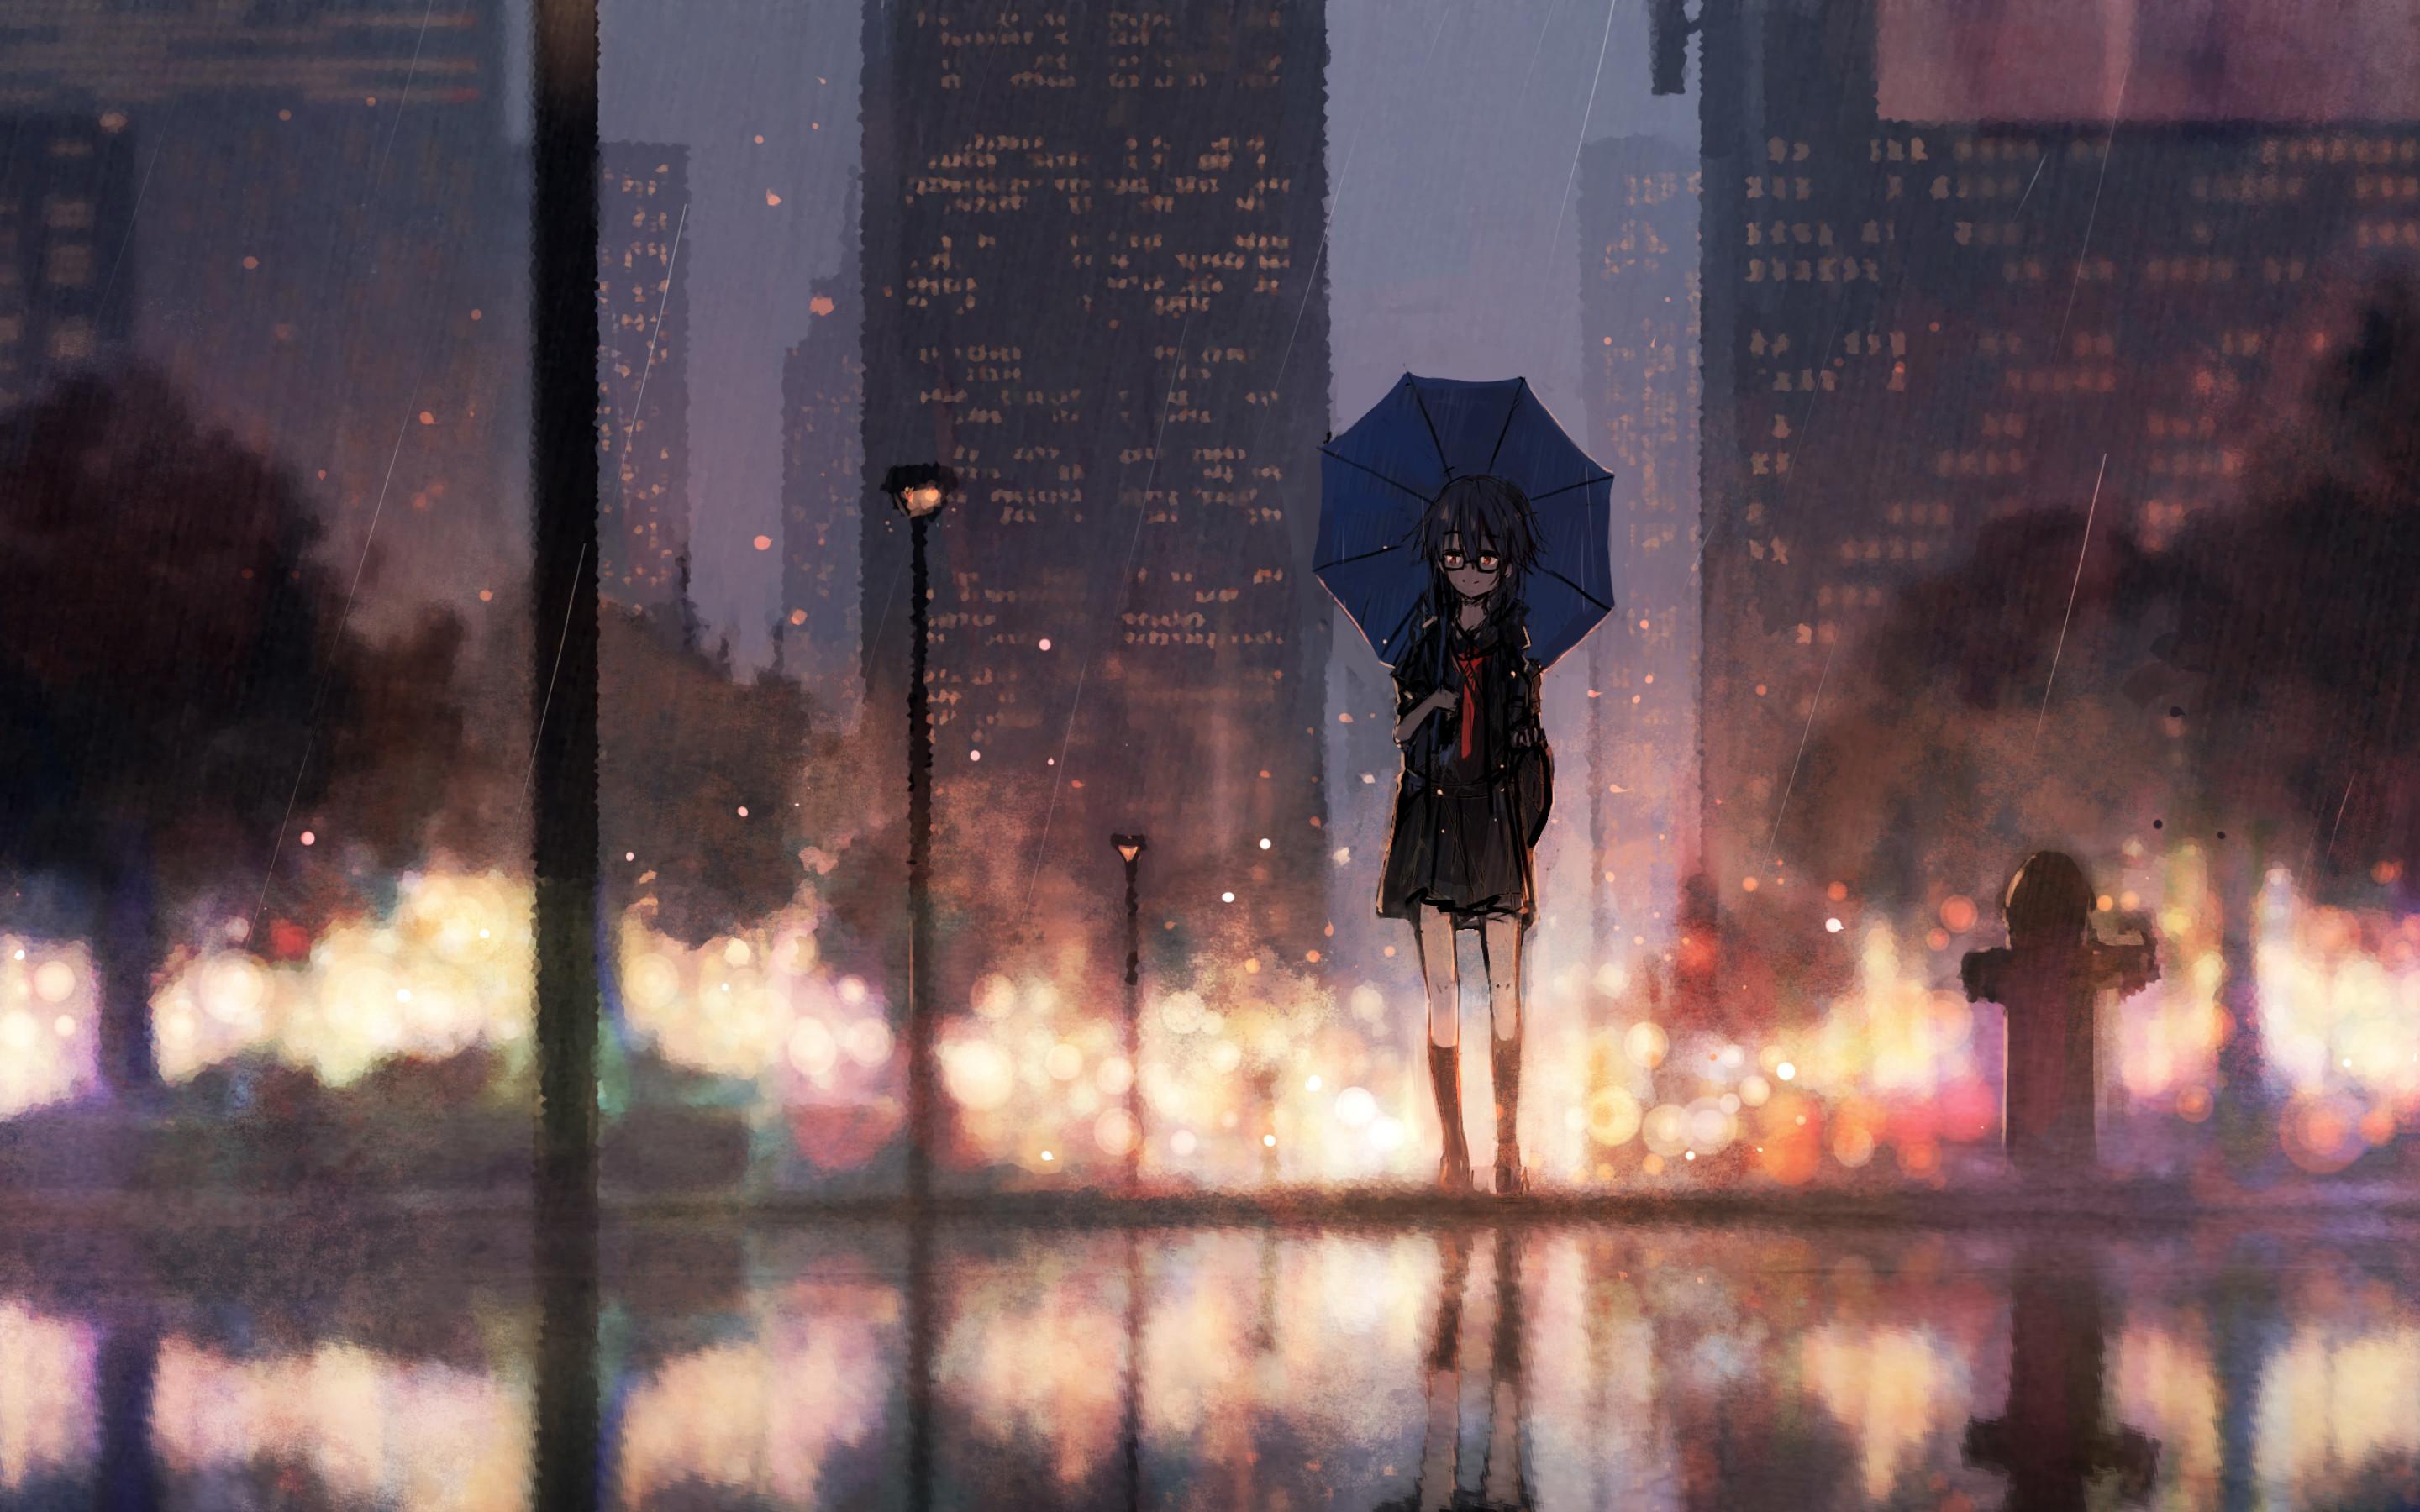 Rainy Anime Wallpaperwalpaperlist.com